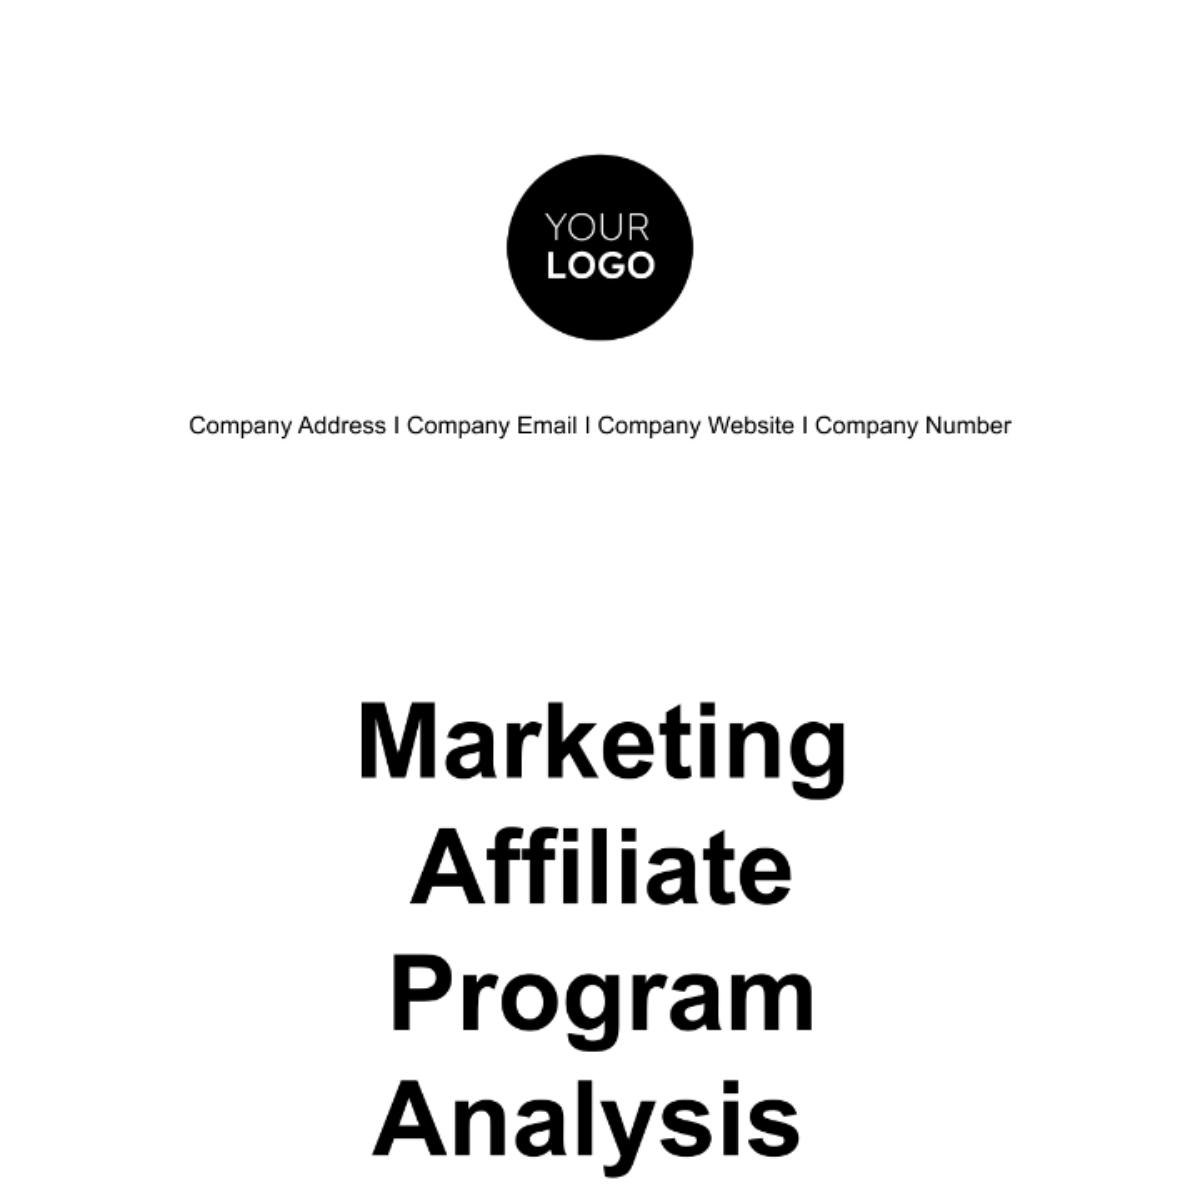 Marketing Affiliate Program Analysis Template